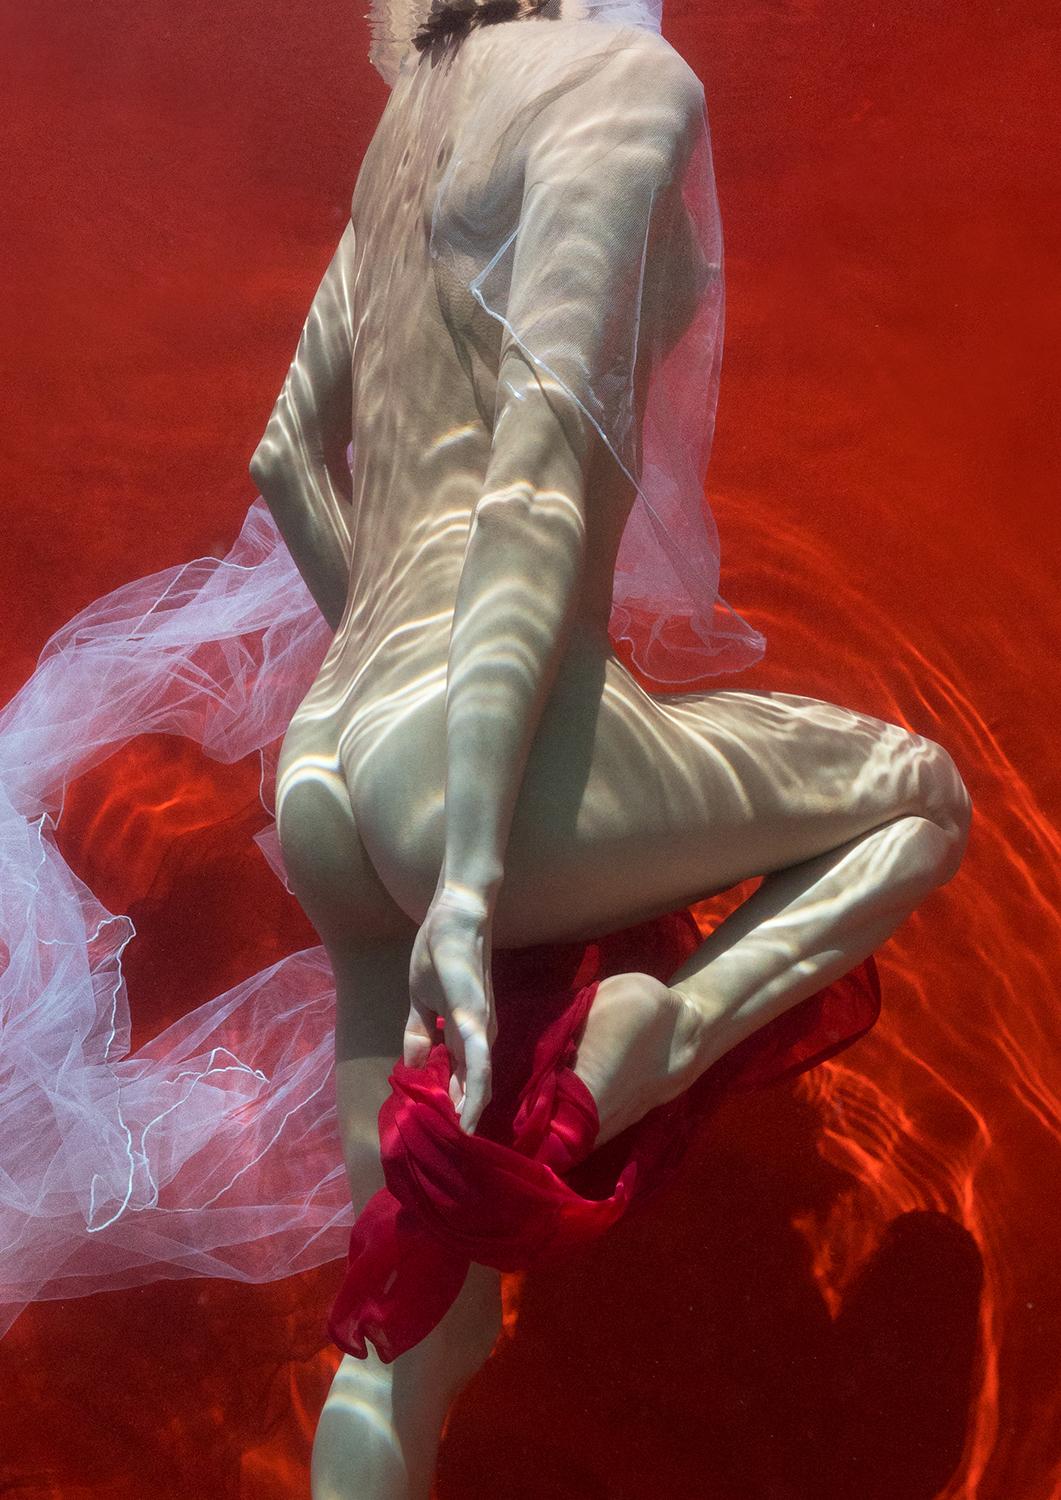 Blood and Milk VII  - underwater nude photograph - print on aluminum 36